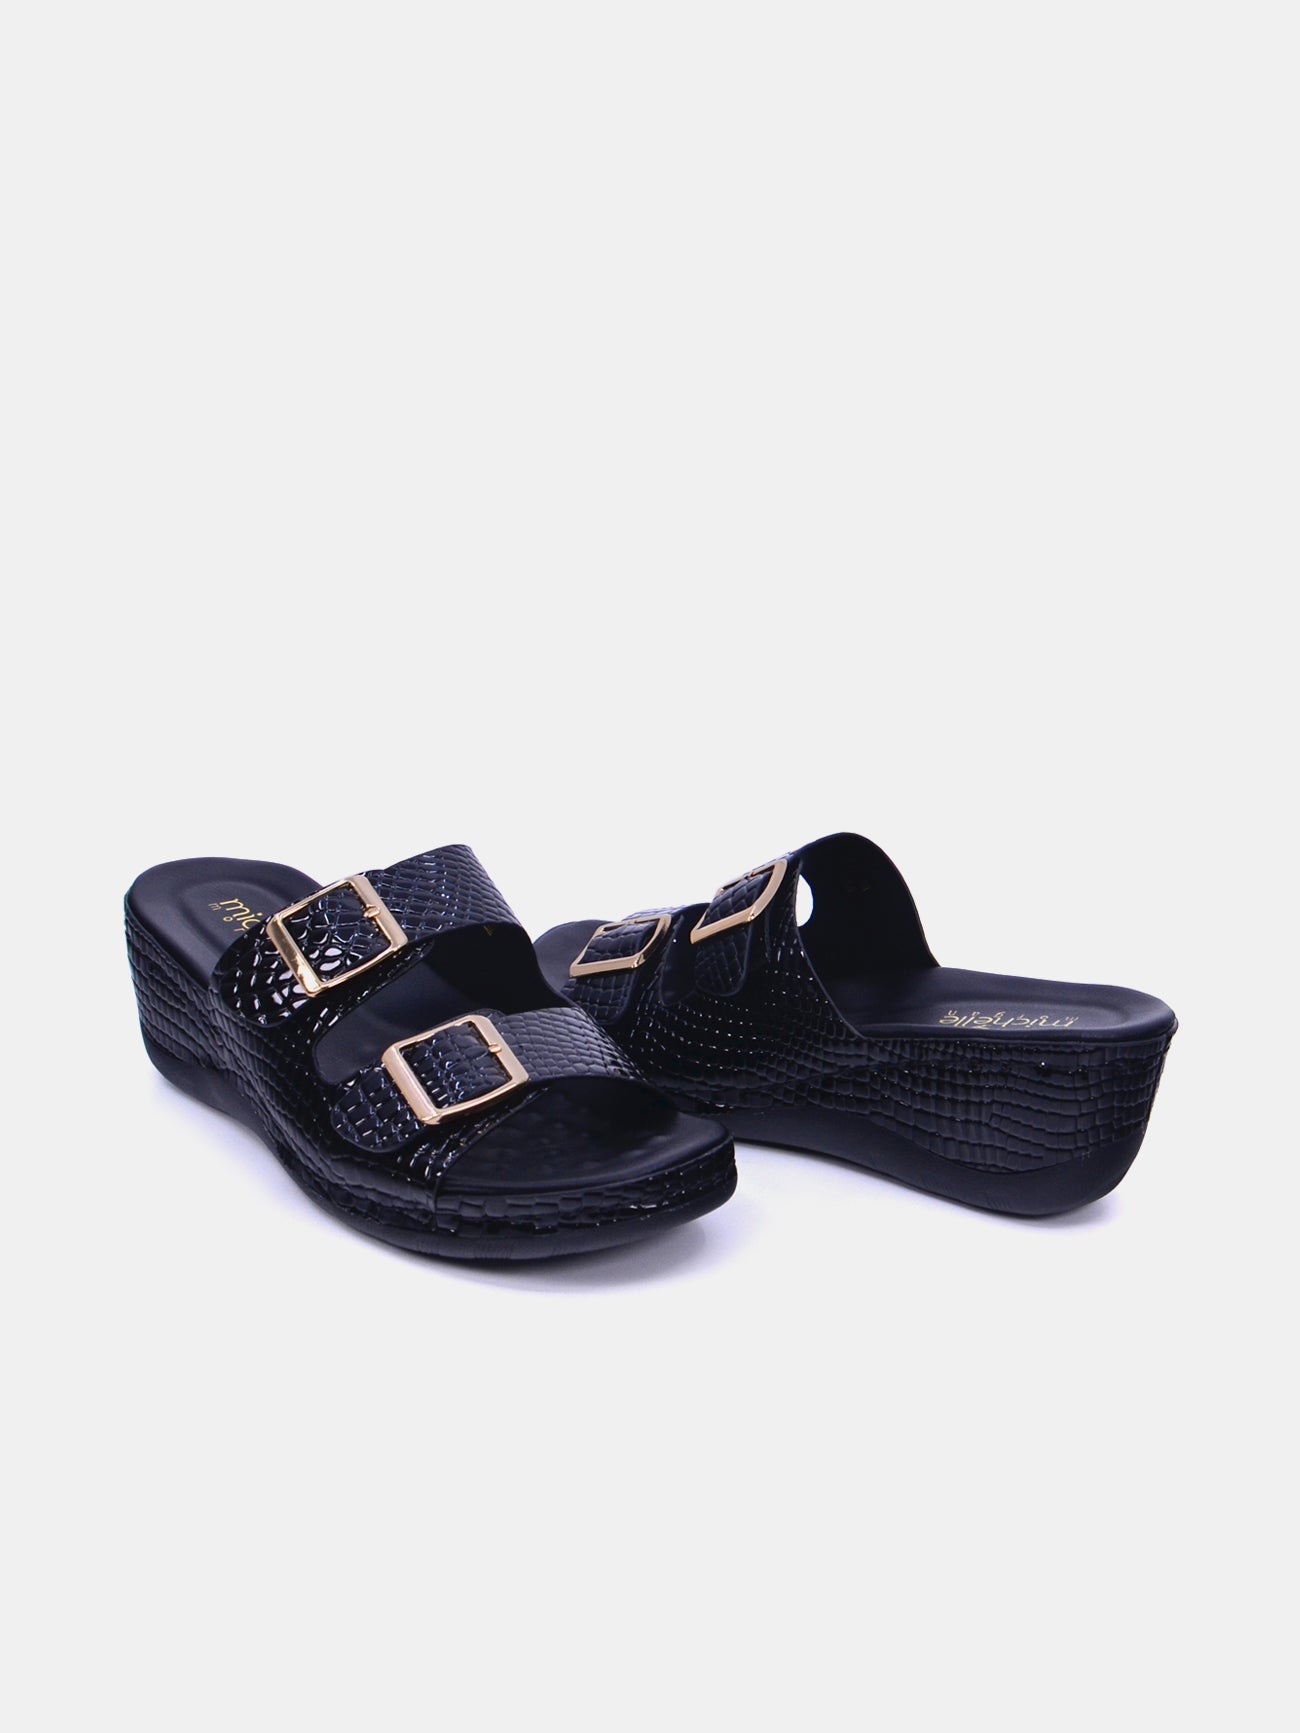 Michelle Morgan 314F7803 Women's Wedge Sandals #color_Black